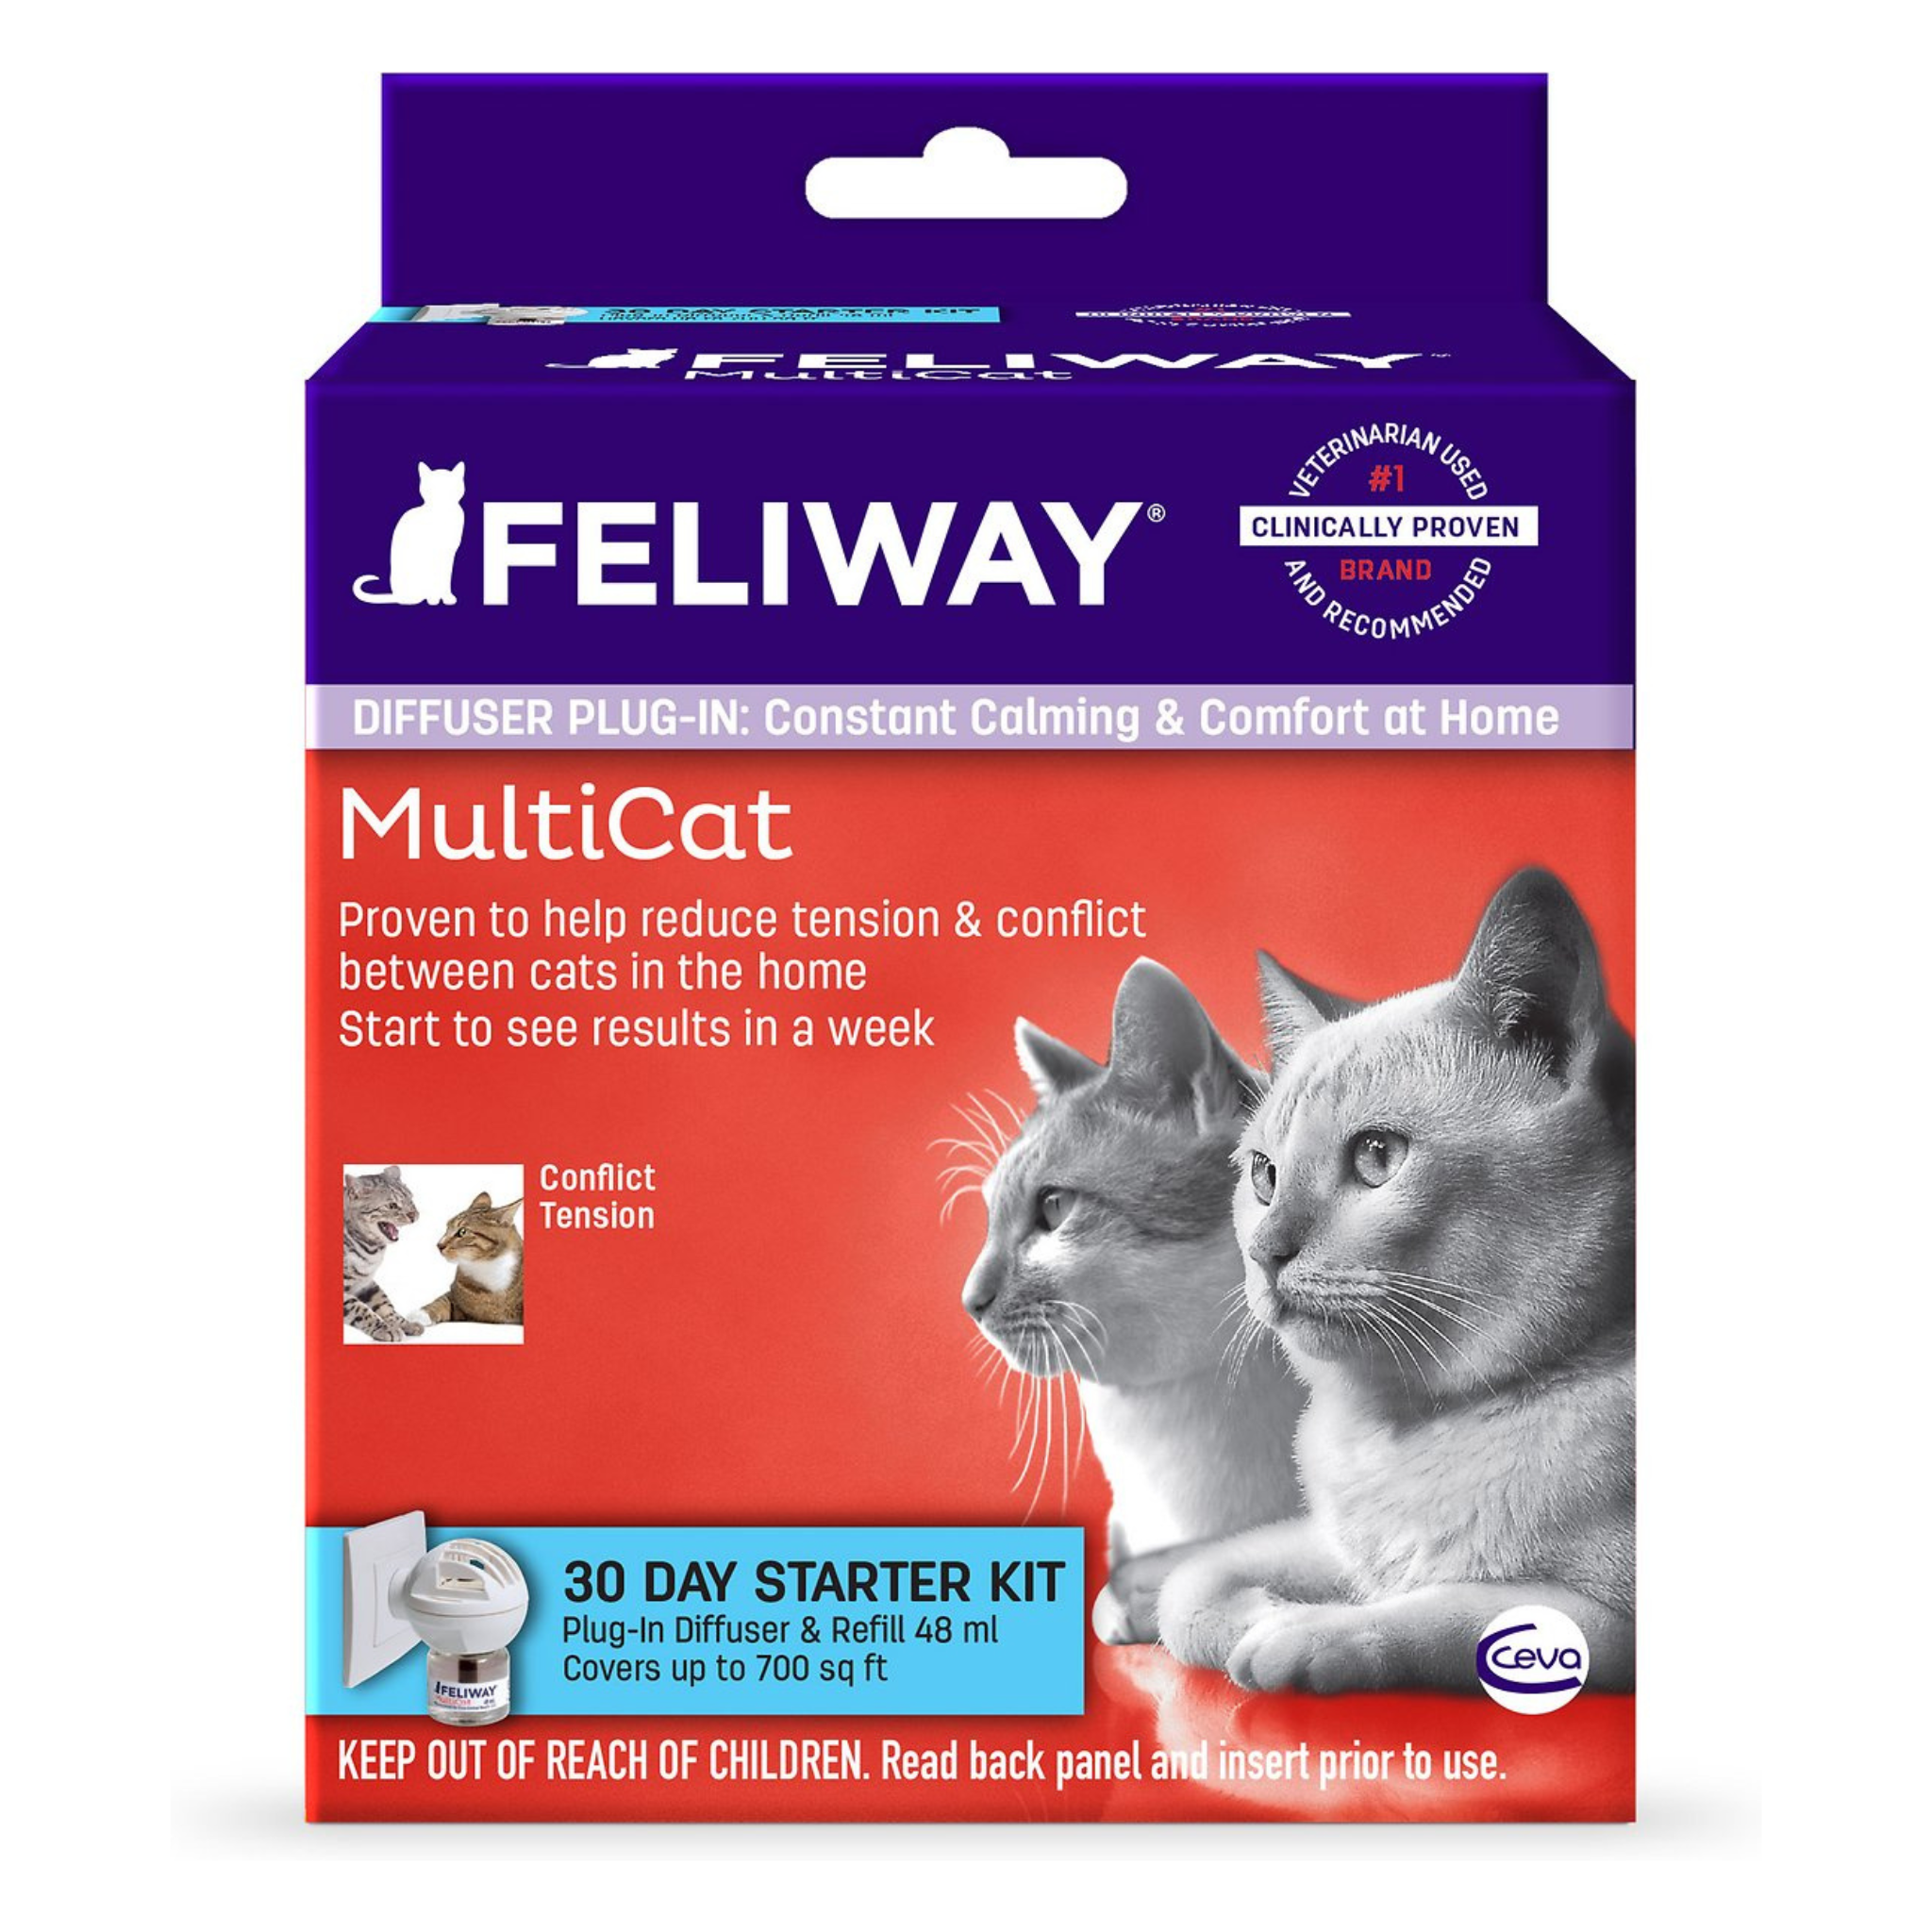 FELIWAY® Help! Diffuser Kit